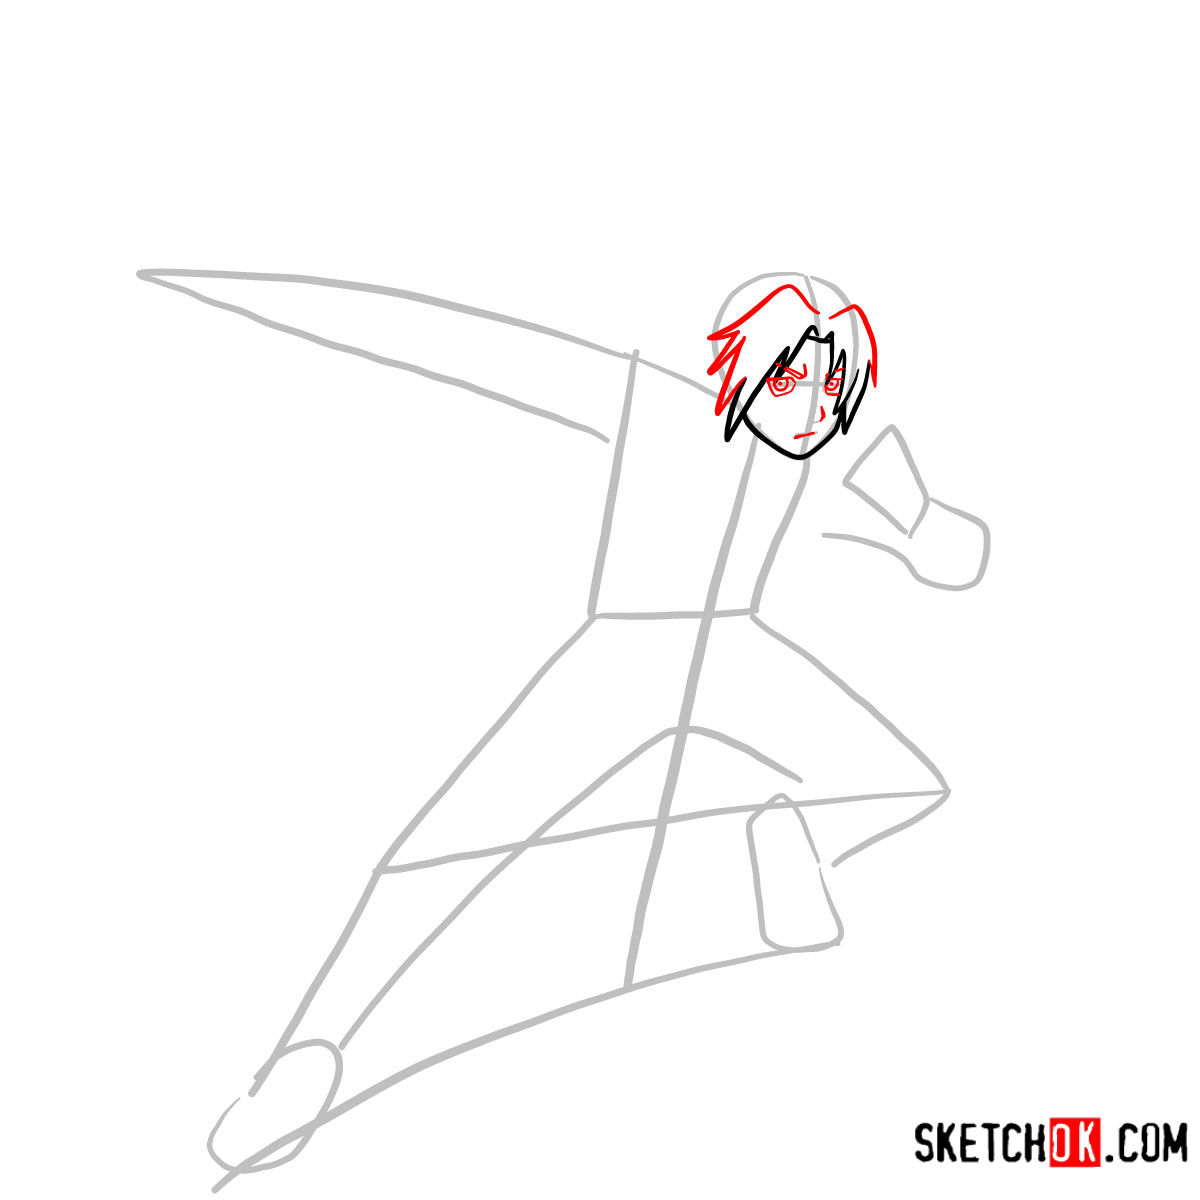 How to draw Edward Elric in a fight | Fullmetal Alchemist - step 04